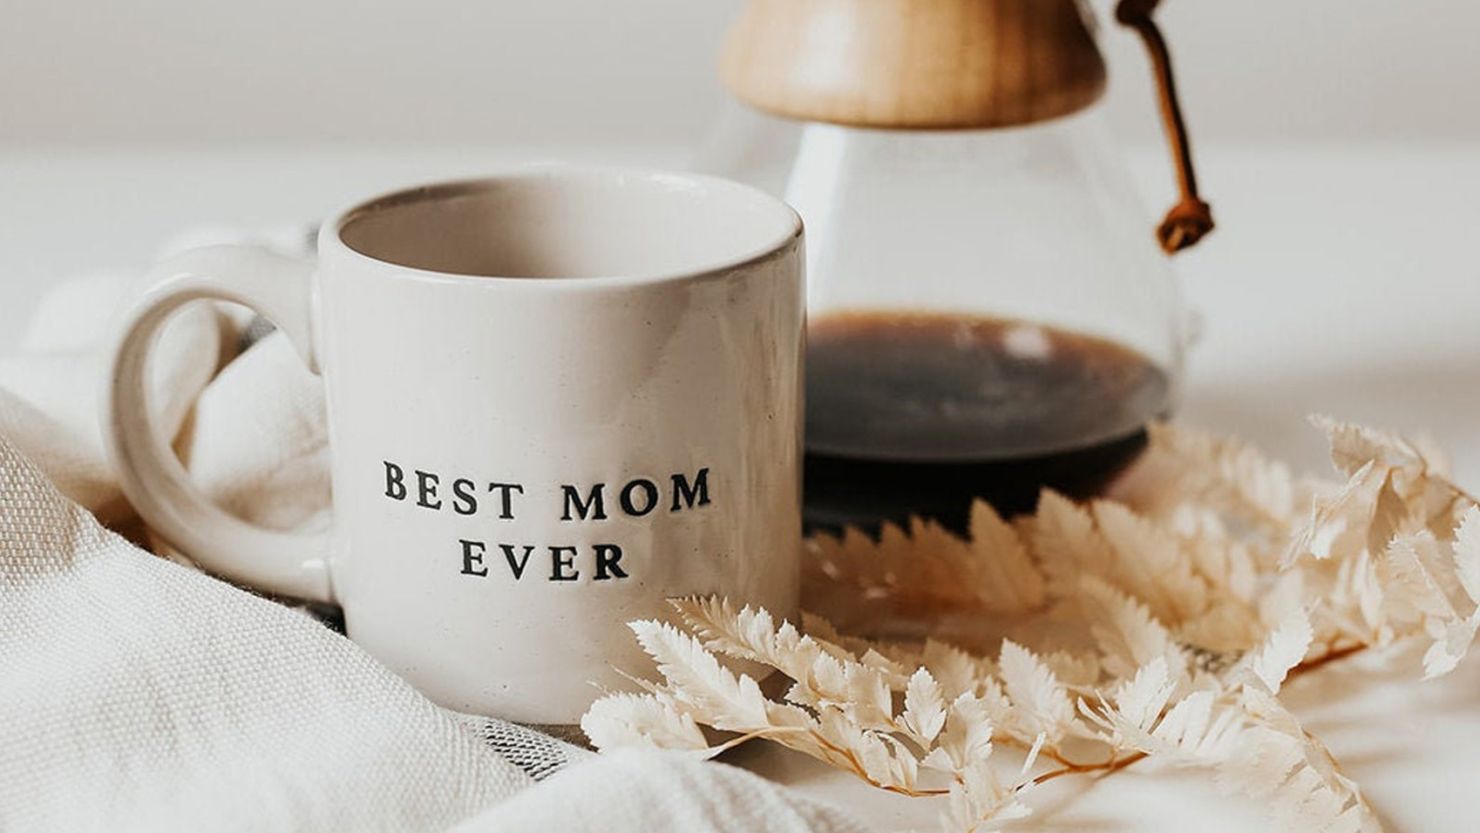 Boy Mom Gifts: Perfect, Thoughtful, Wonderful!